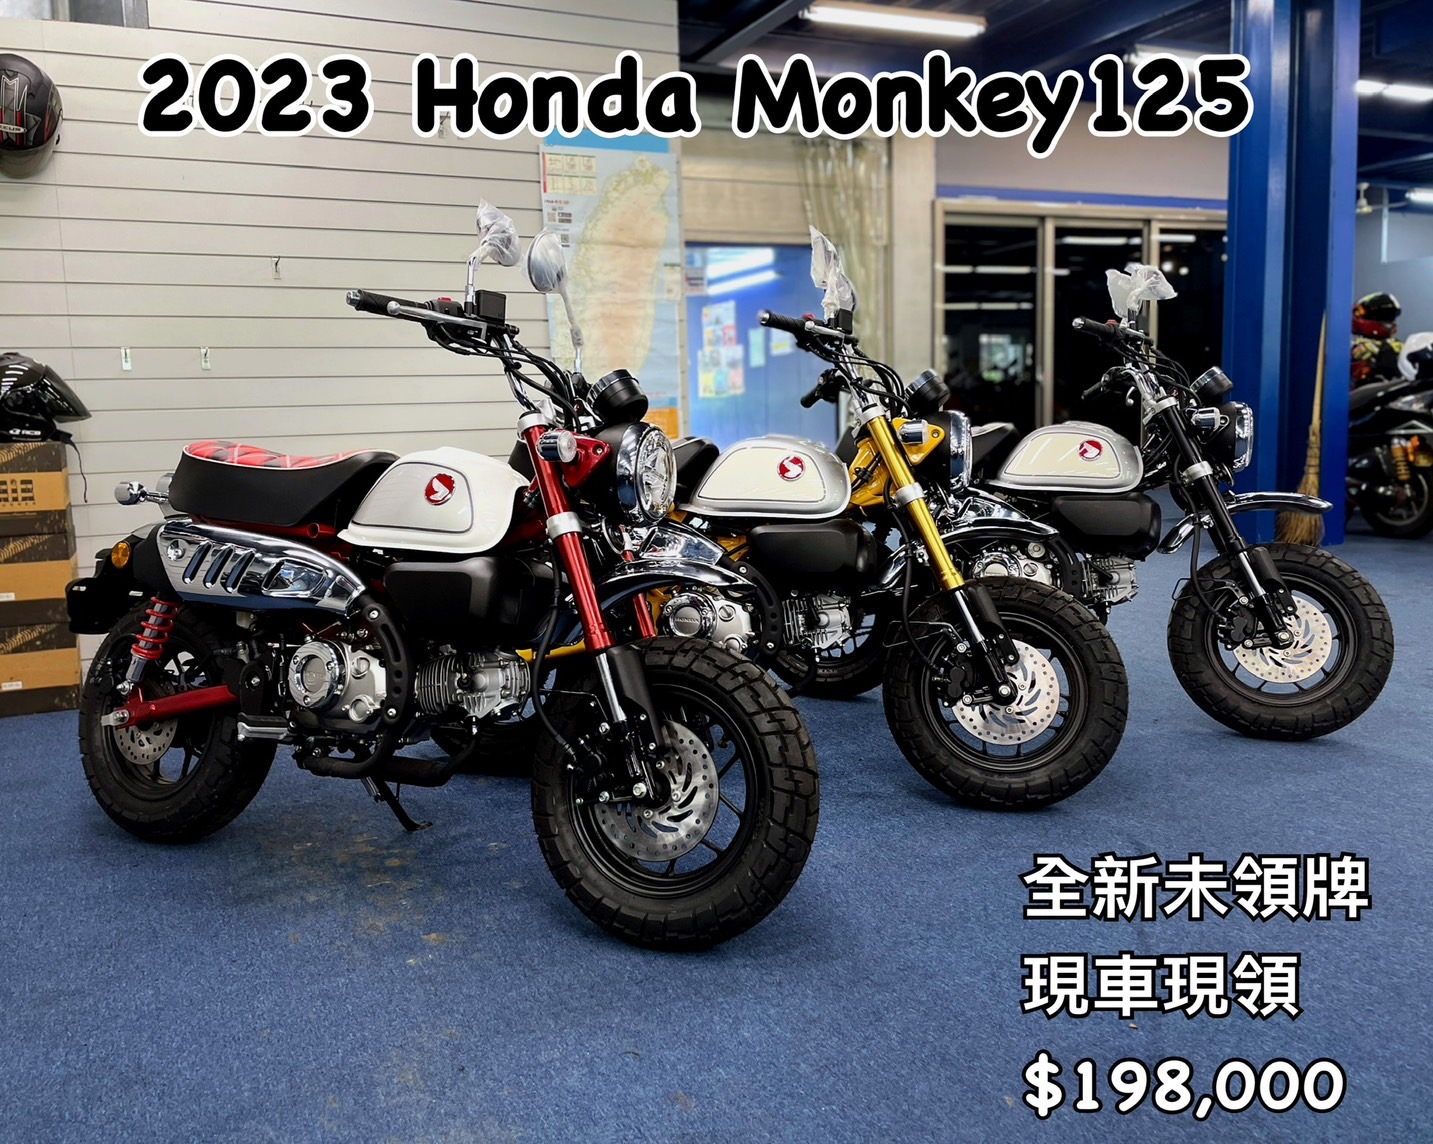 HONDA Monkey 125新車出售中 2023 格紋款HONDA MONKEY125 三色現車現領！！19.8萬 貿易車 | 原夢輕重機